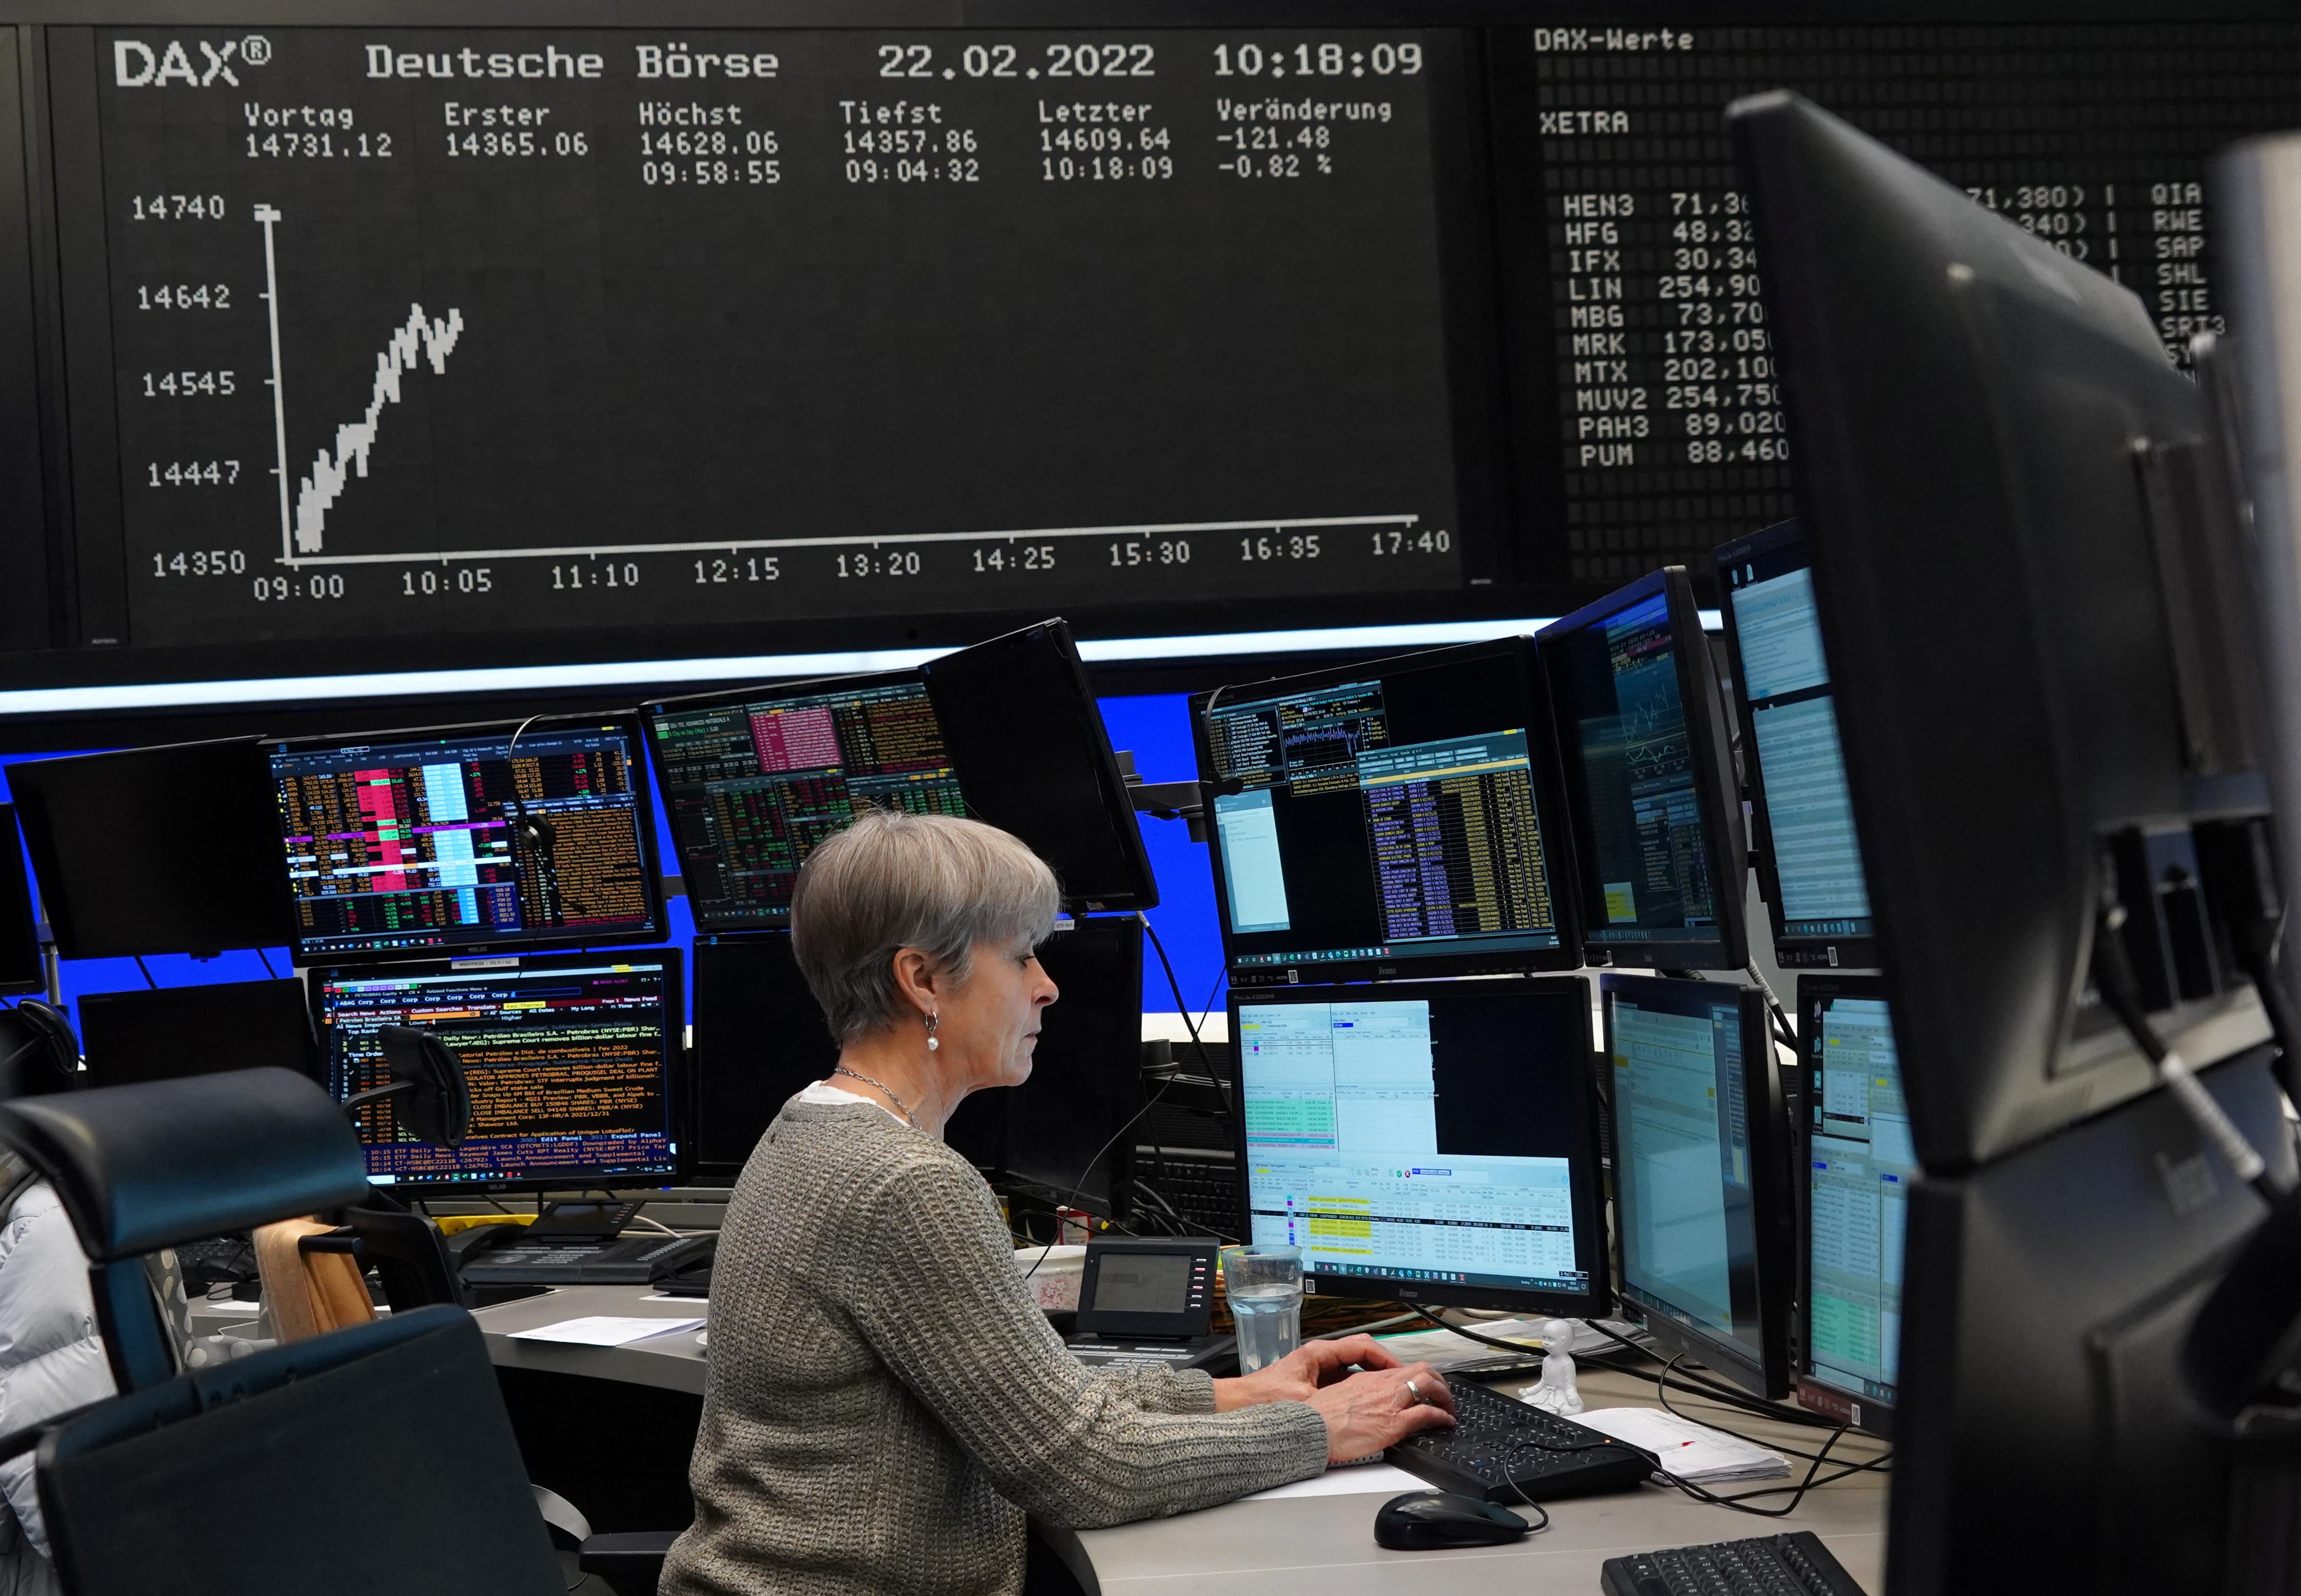 A trader works at the Frankfurt Stock Exchange in Frankfurt, Germany, February 22, 2022. REUTERS/Tim Reichert